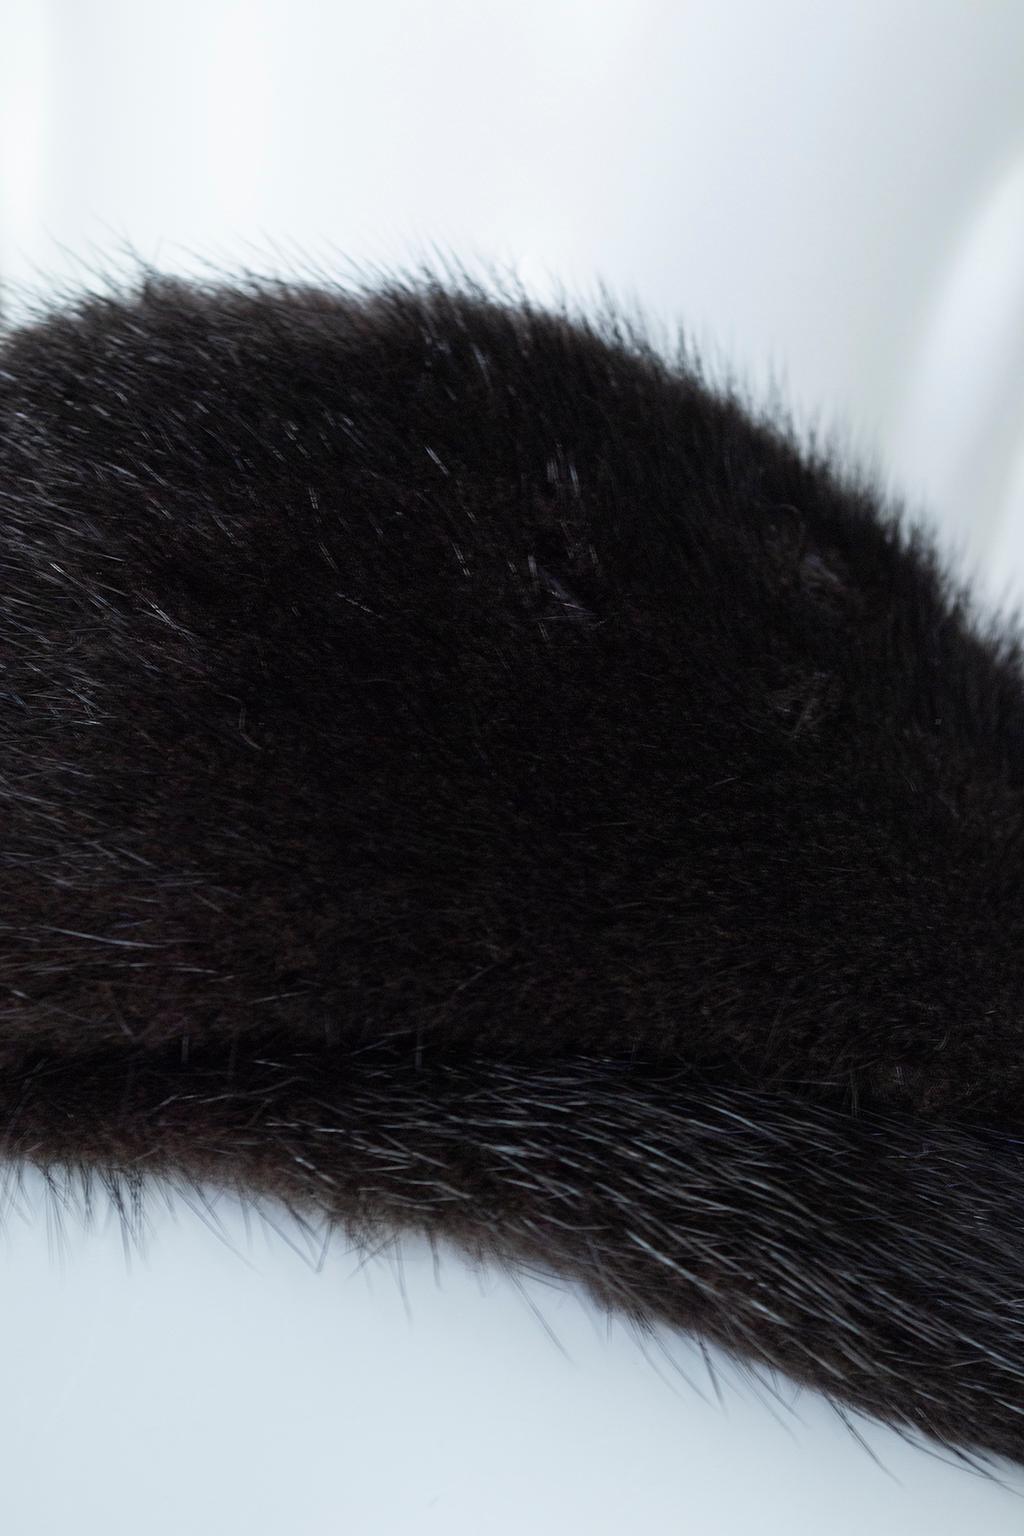 Ira Berg Silky Black Mink Fur Fringed Boa Scarf or Belt – 64